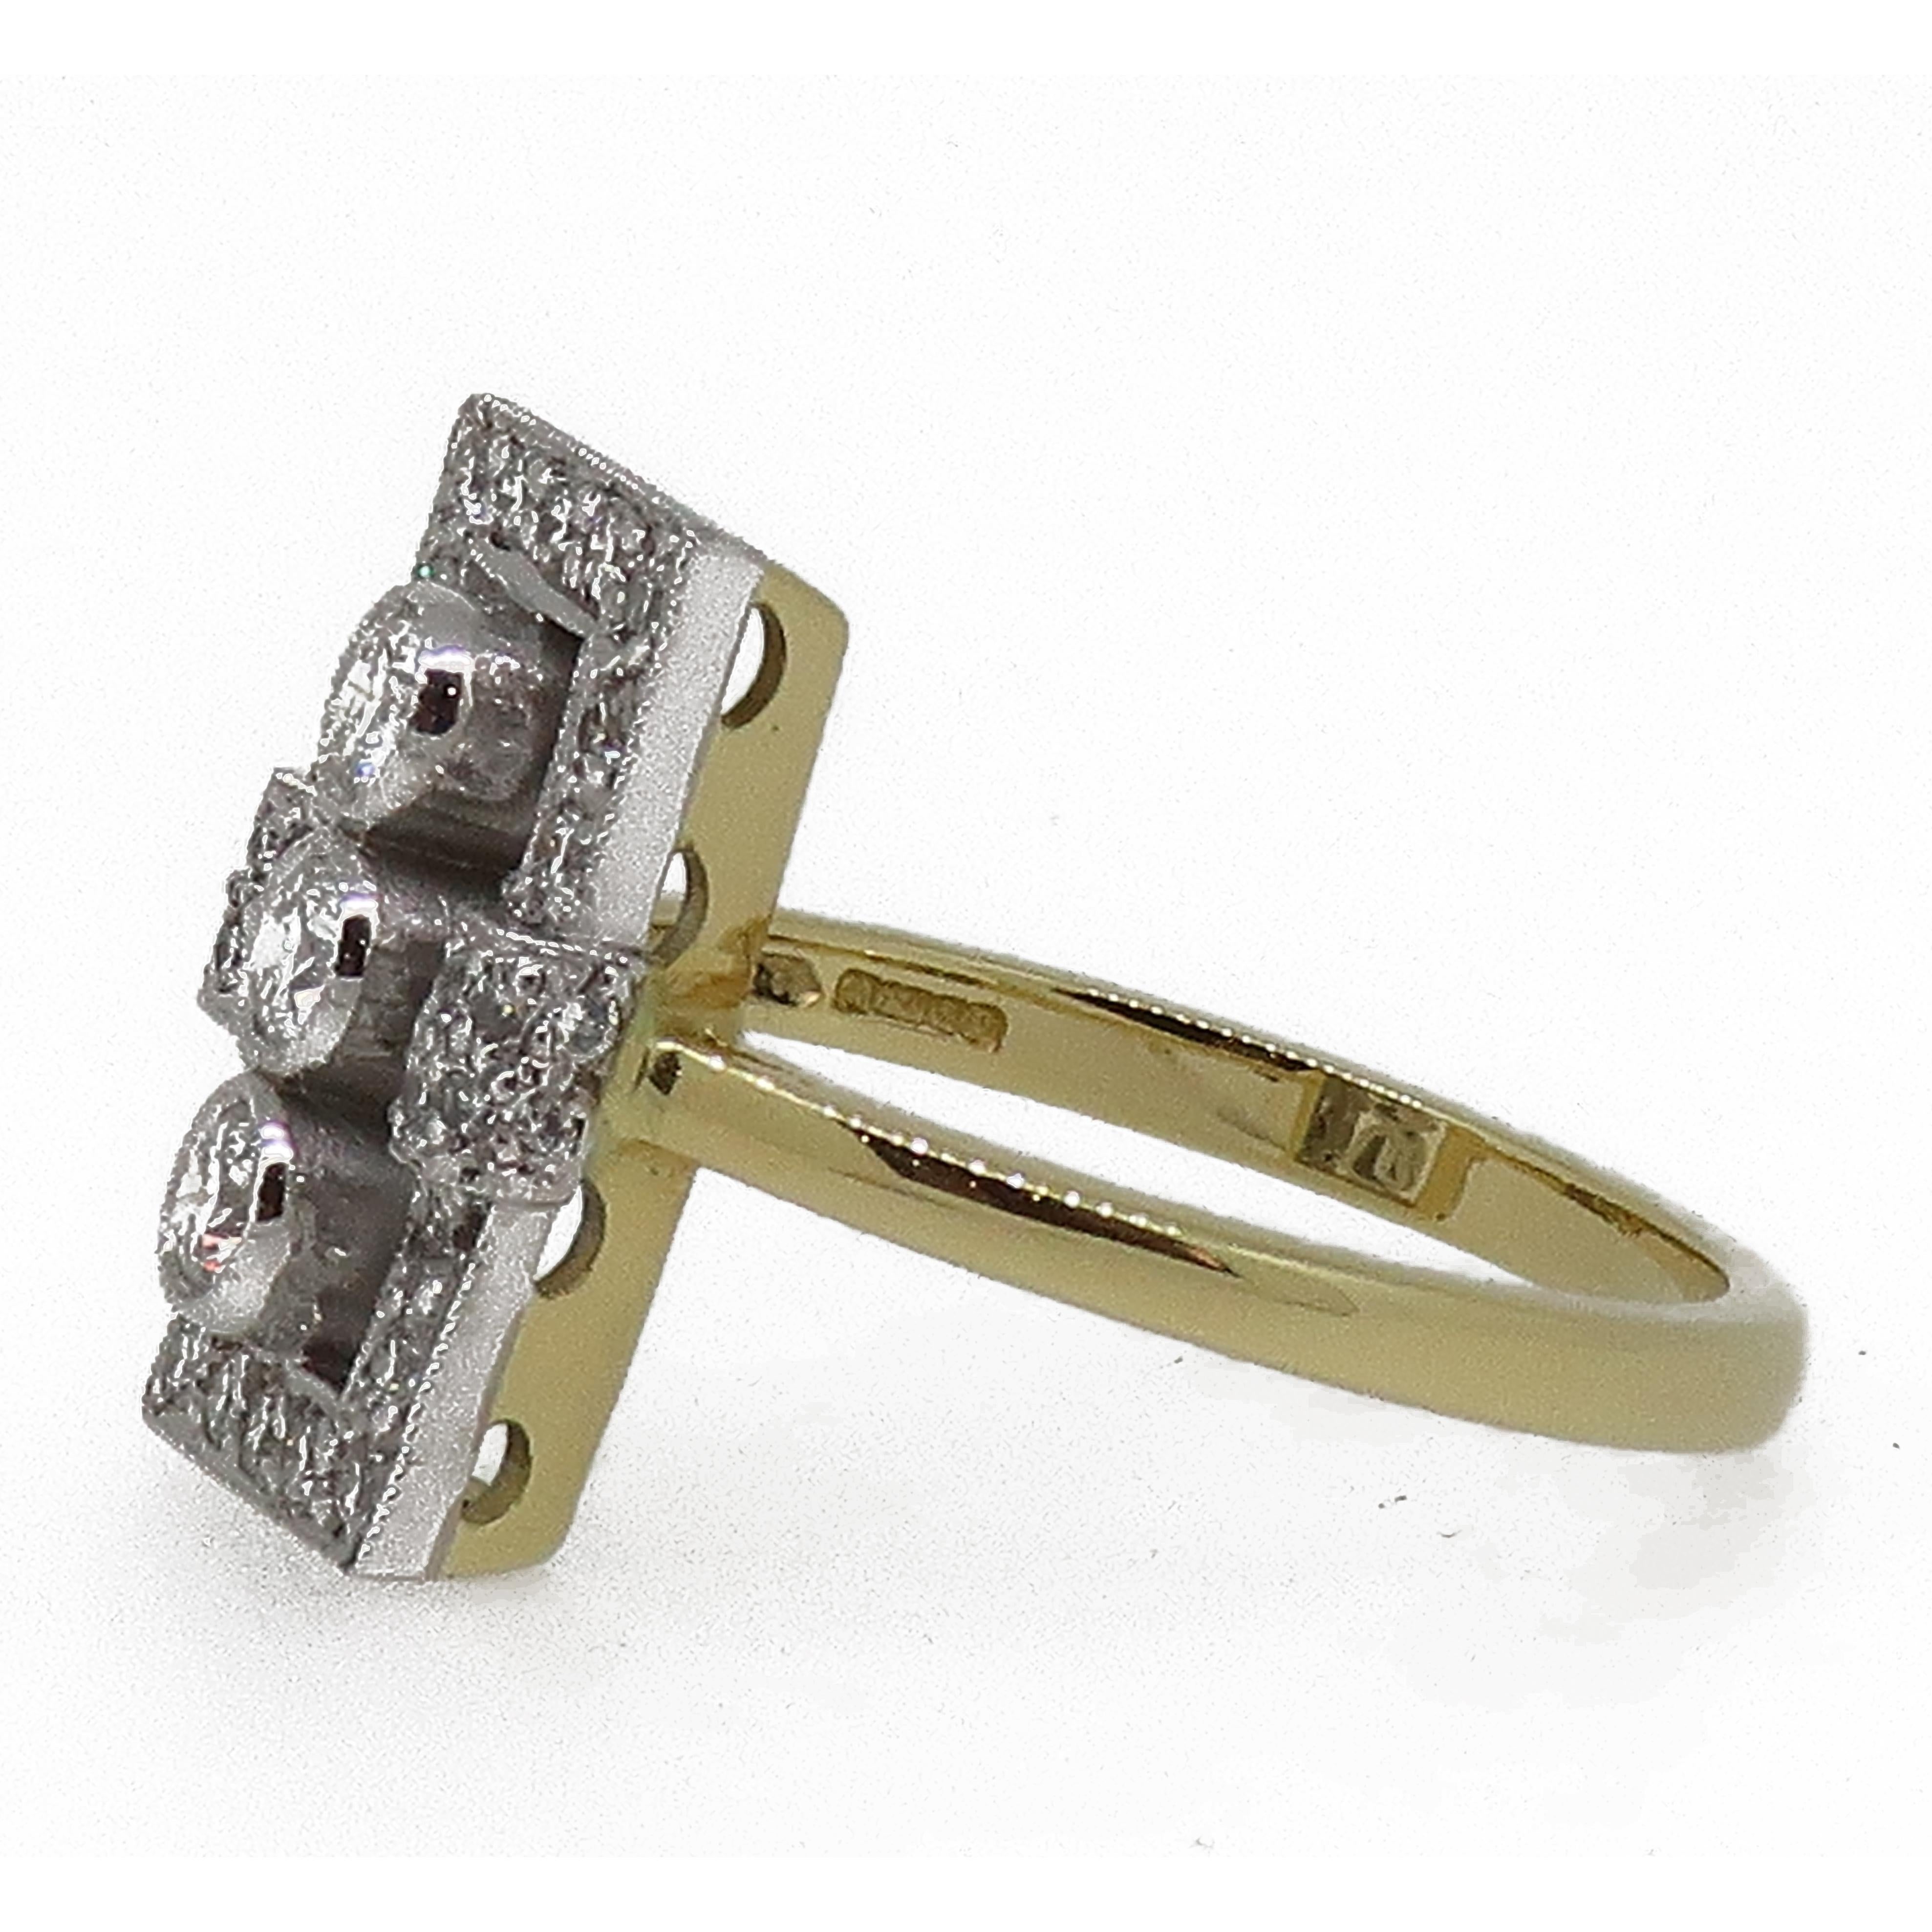 Brilliant Cut Diamond Art Deco Style Cluster Ring 18 Karat Yellow and White Gold